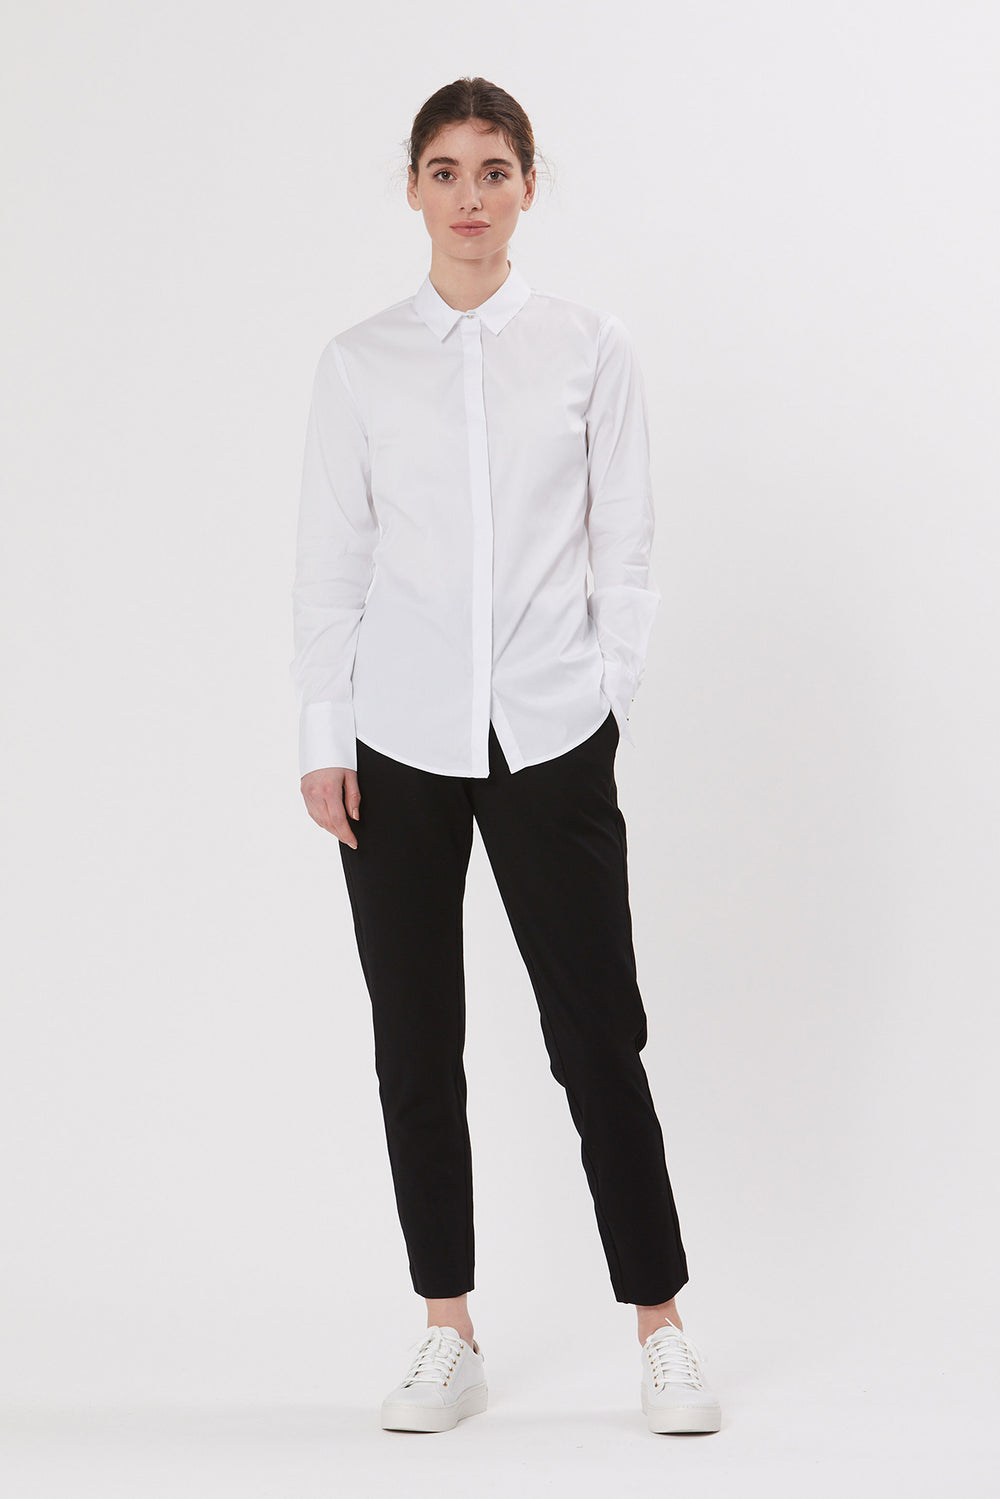 PBO Meghan skjorte SHIRTS 01 White